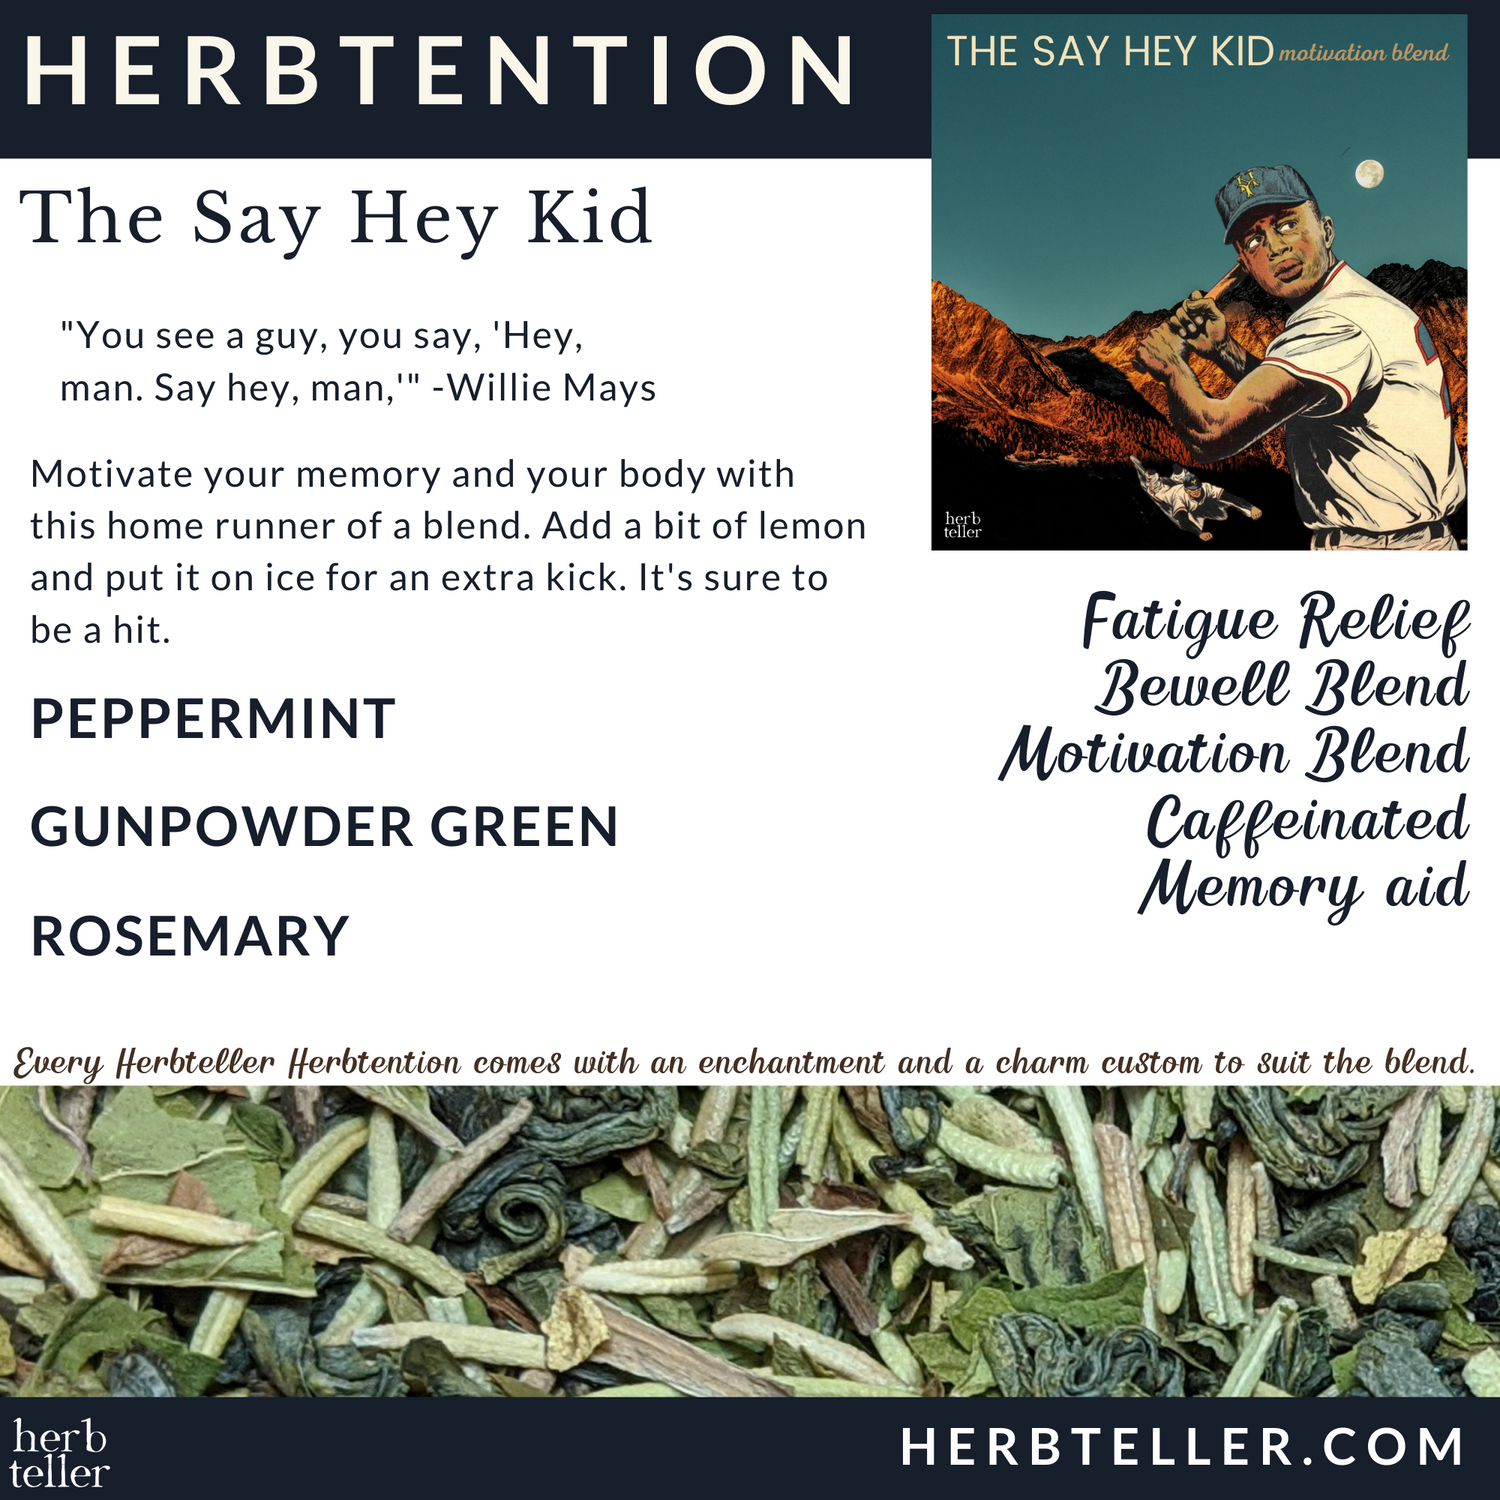 Say Hey Kid Herbal Tea (Motivation Blend) - Original City Apothecary